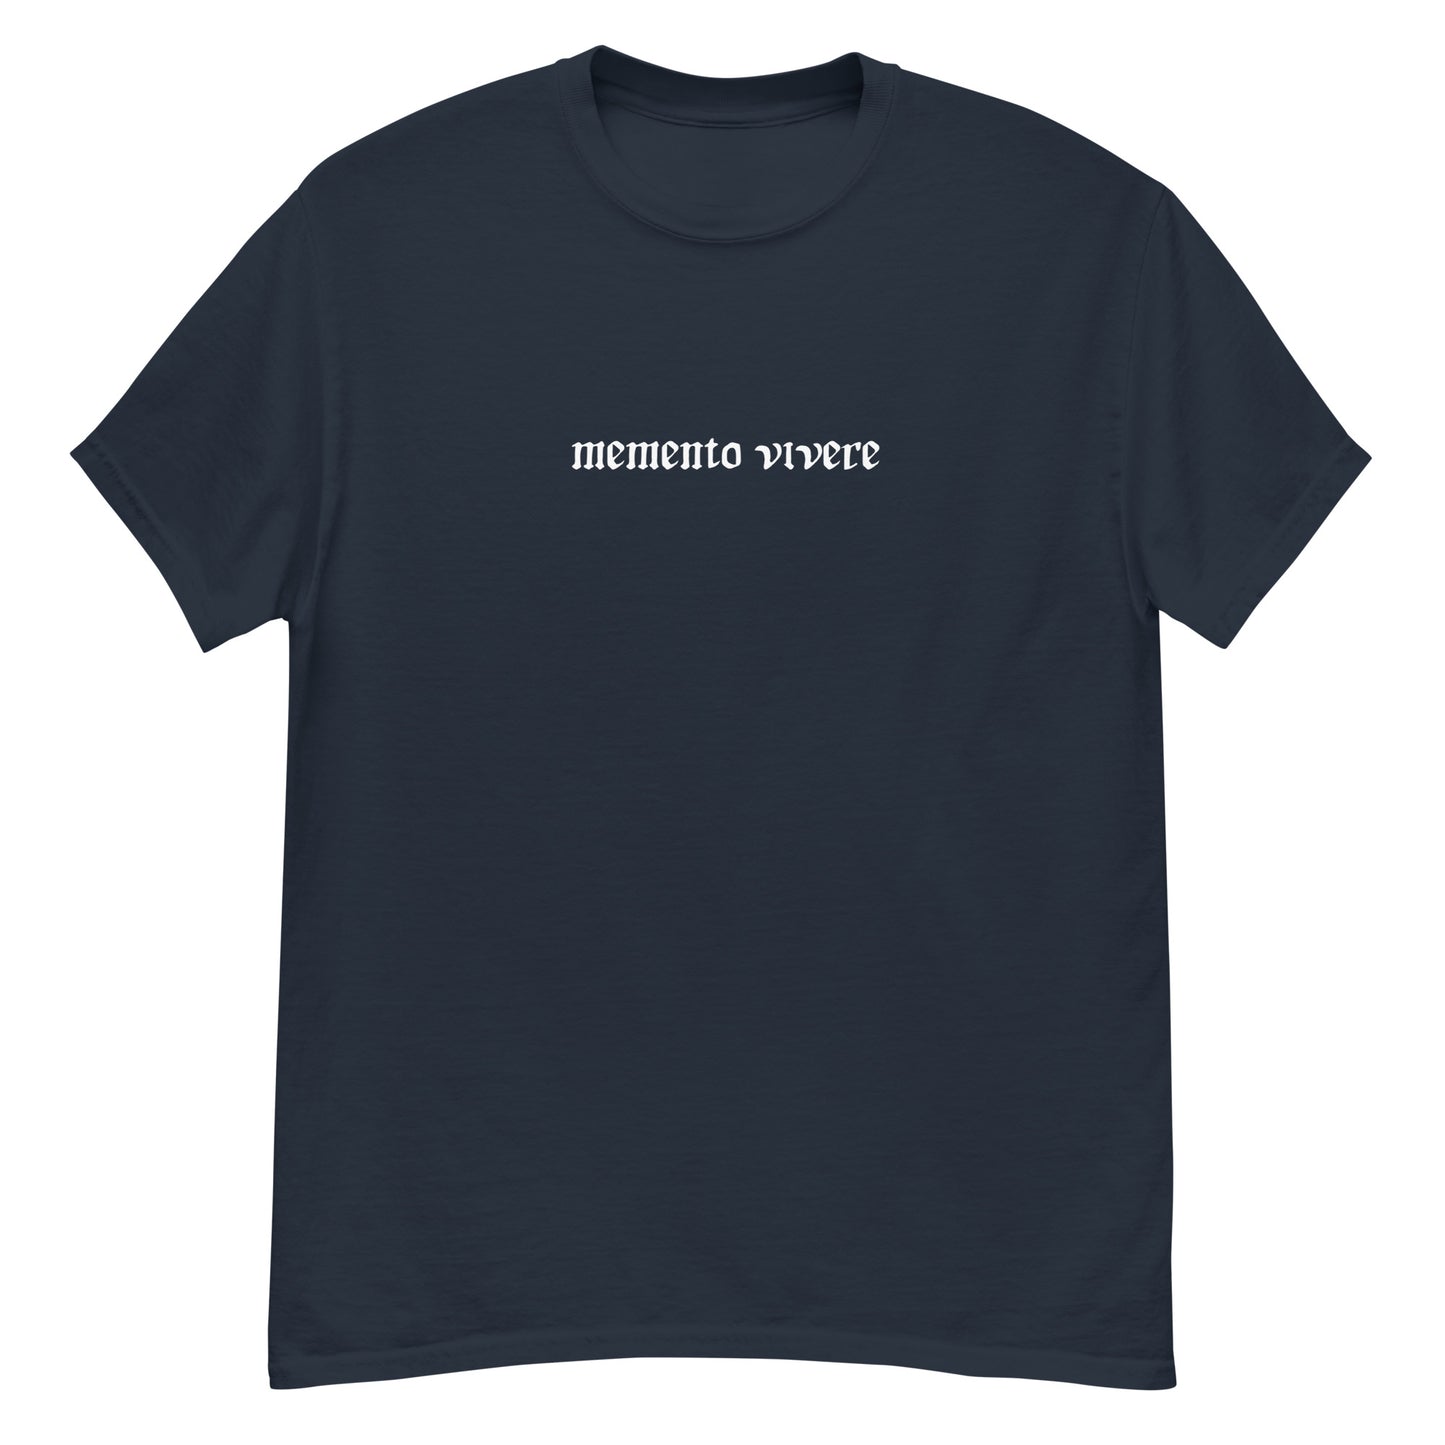 Memento Vivere T-Shirt